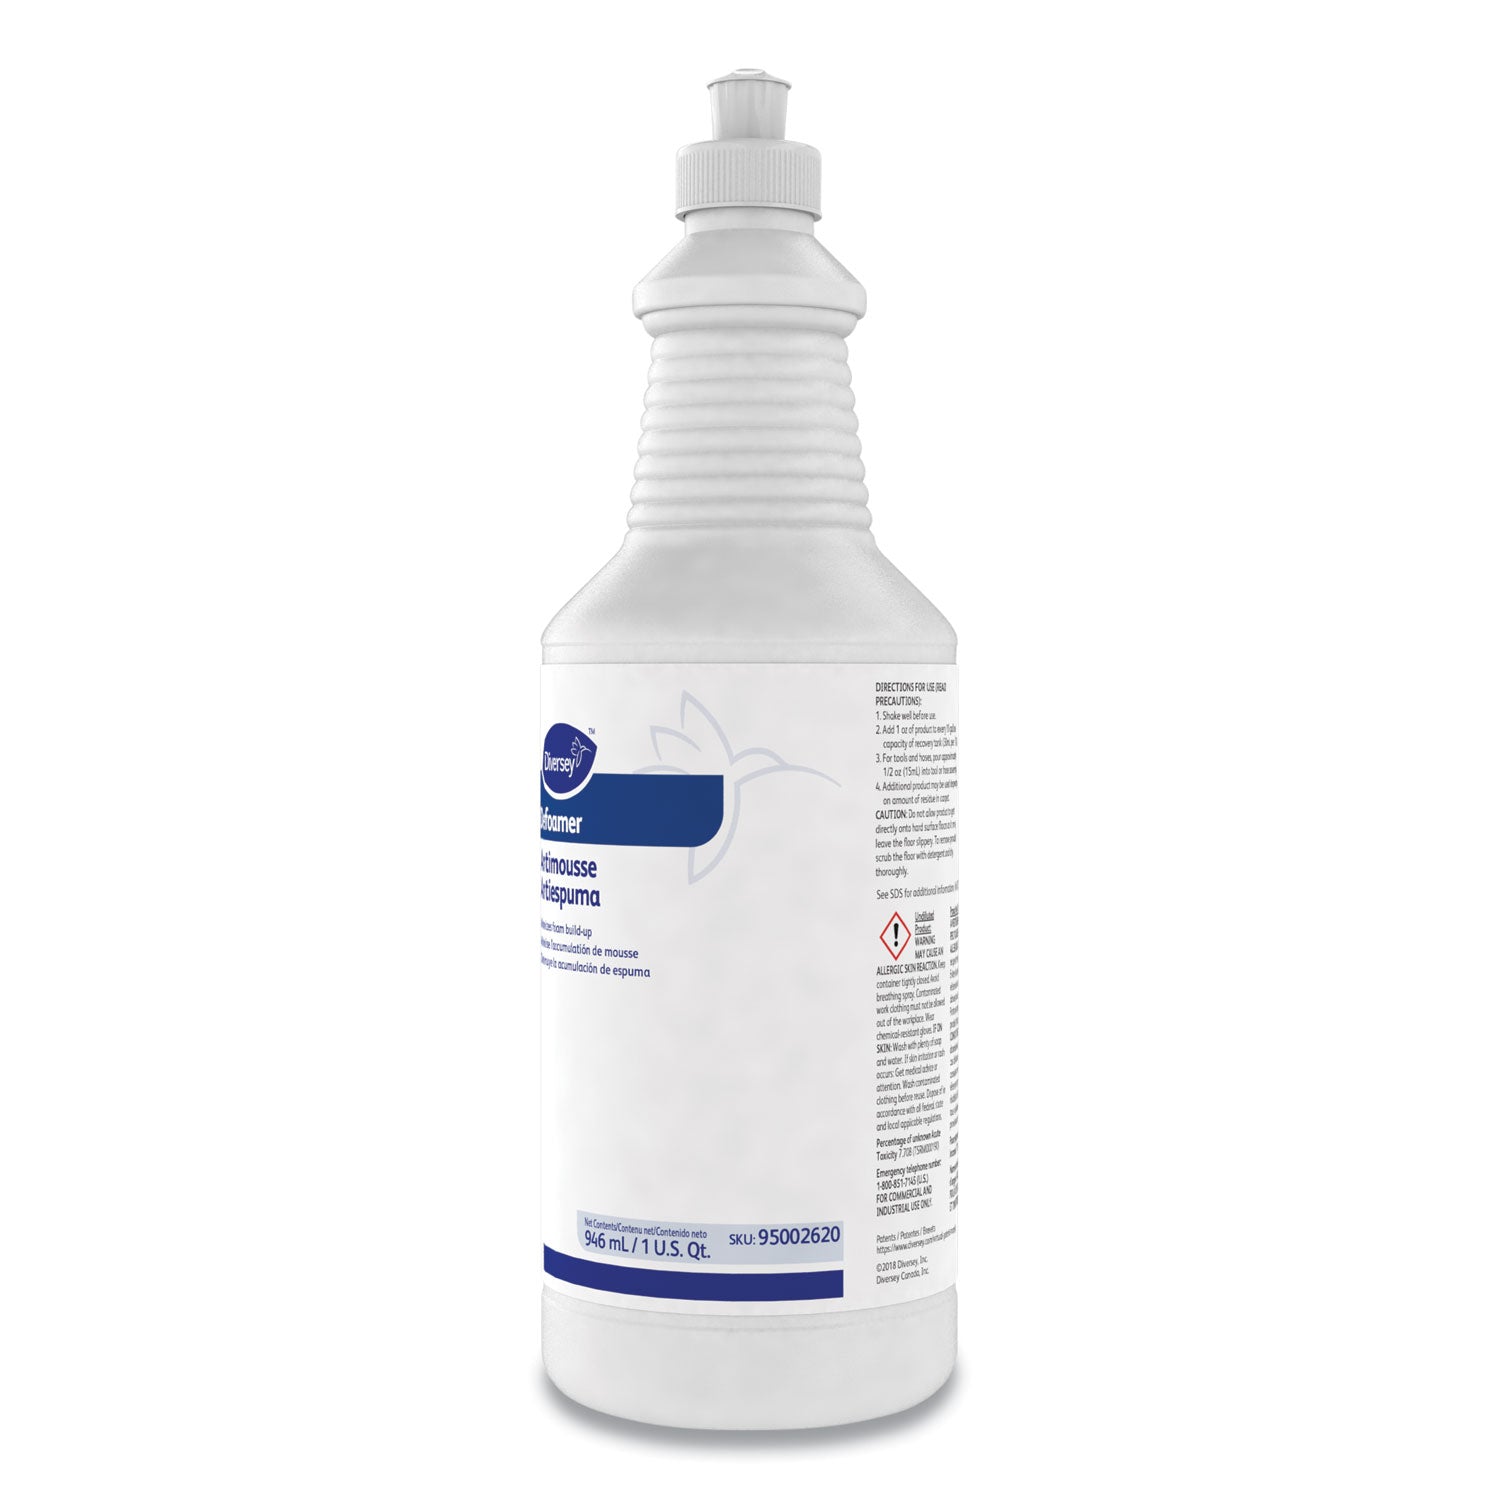 defoamer-carpet-cleaner-cream-bland-scent-32-oz-squeeze-bottle_dvo95002620 - 4